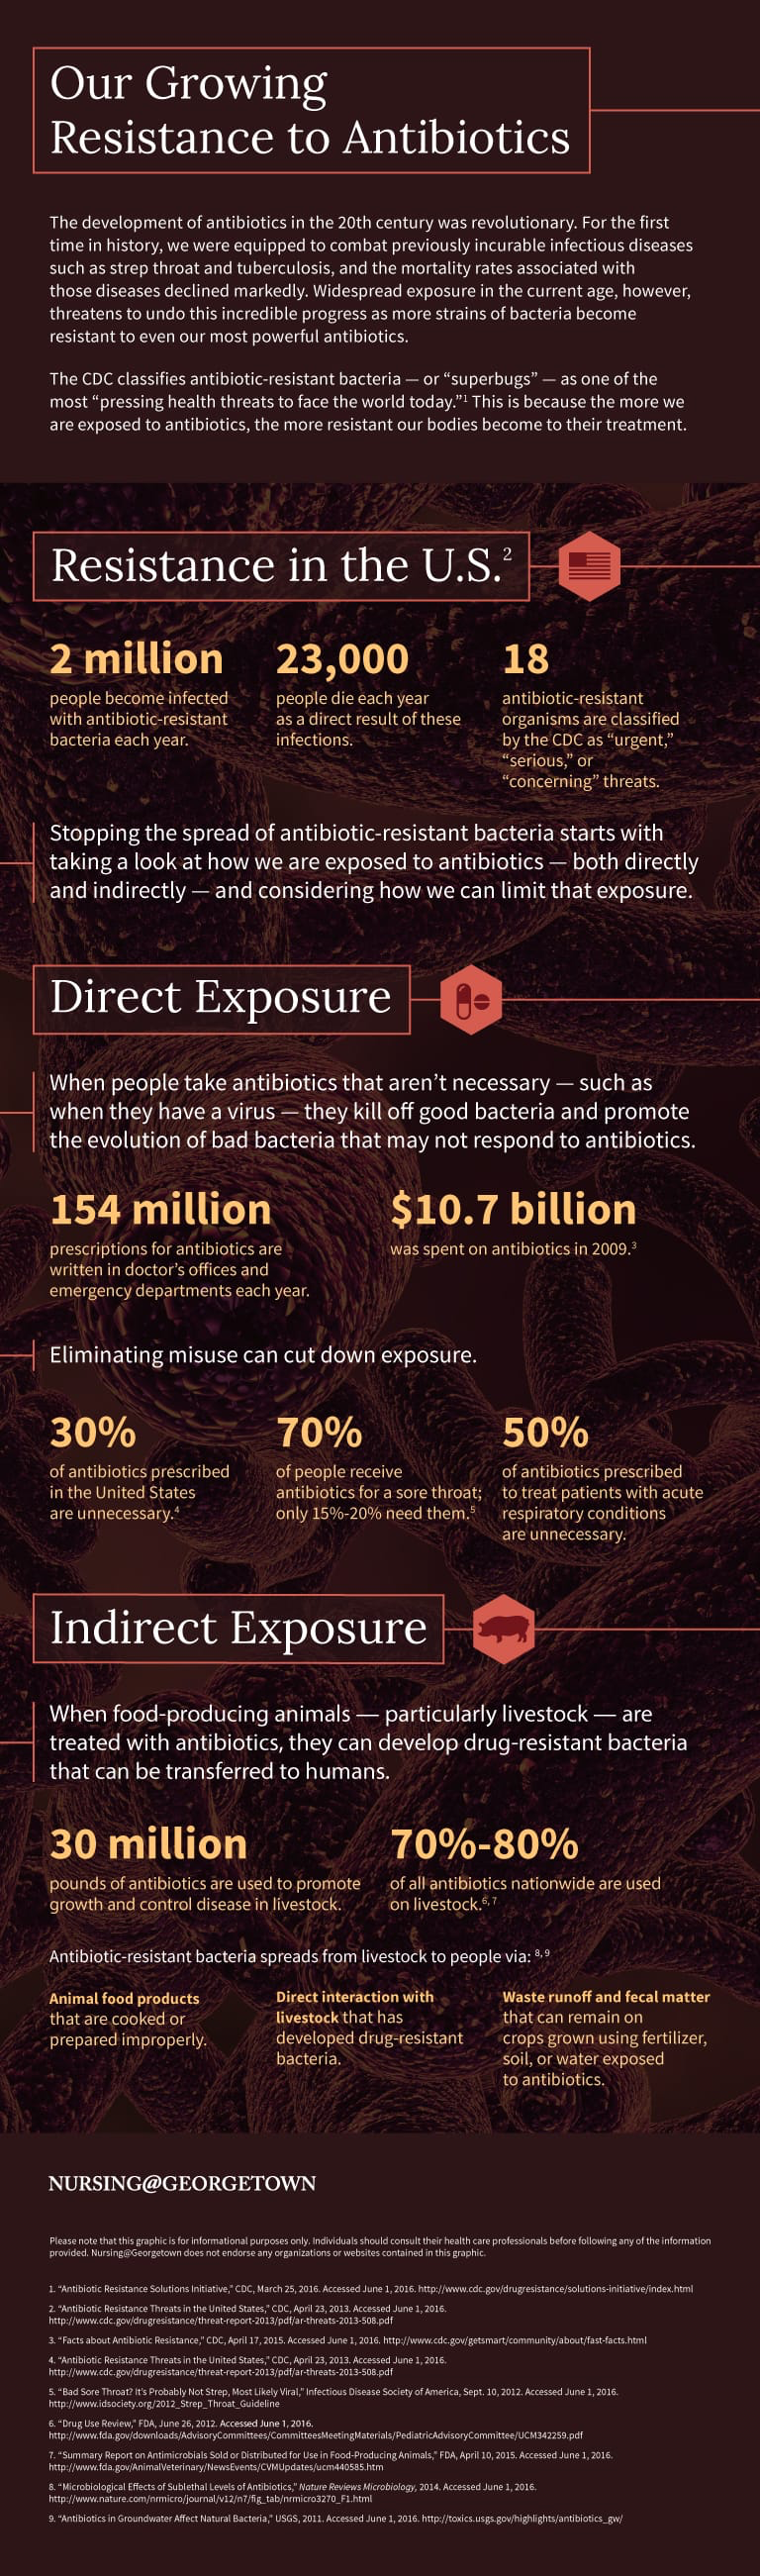 GU_antibiotic_resistance_infographic (1)